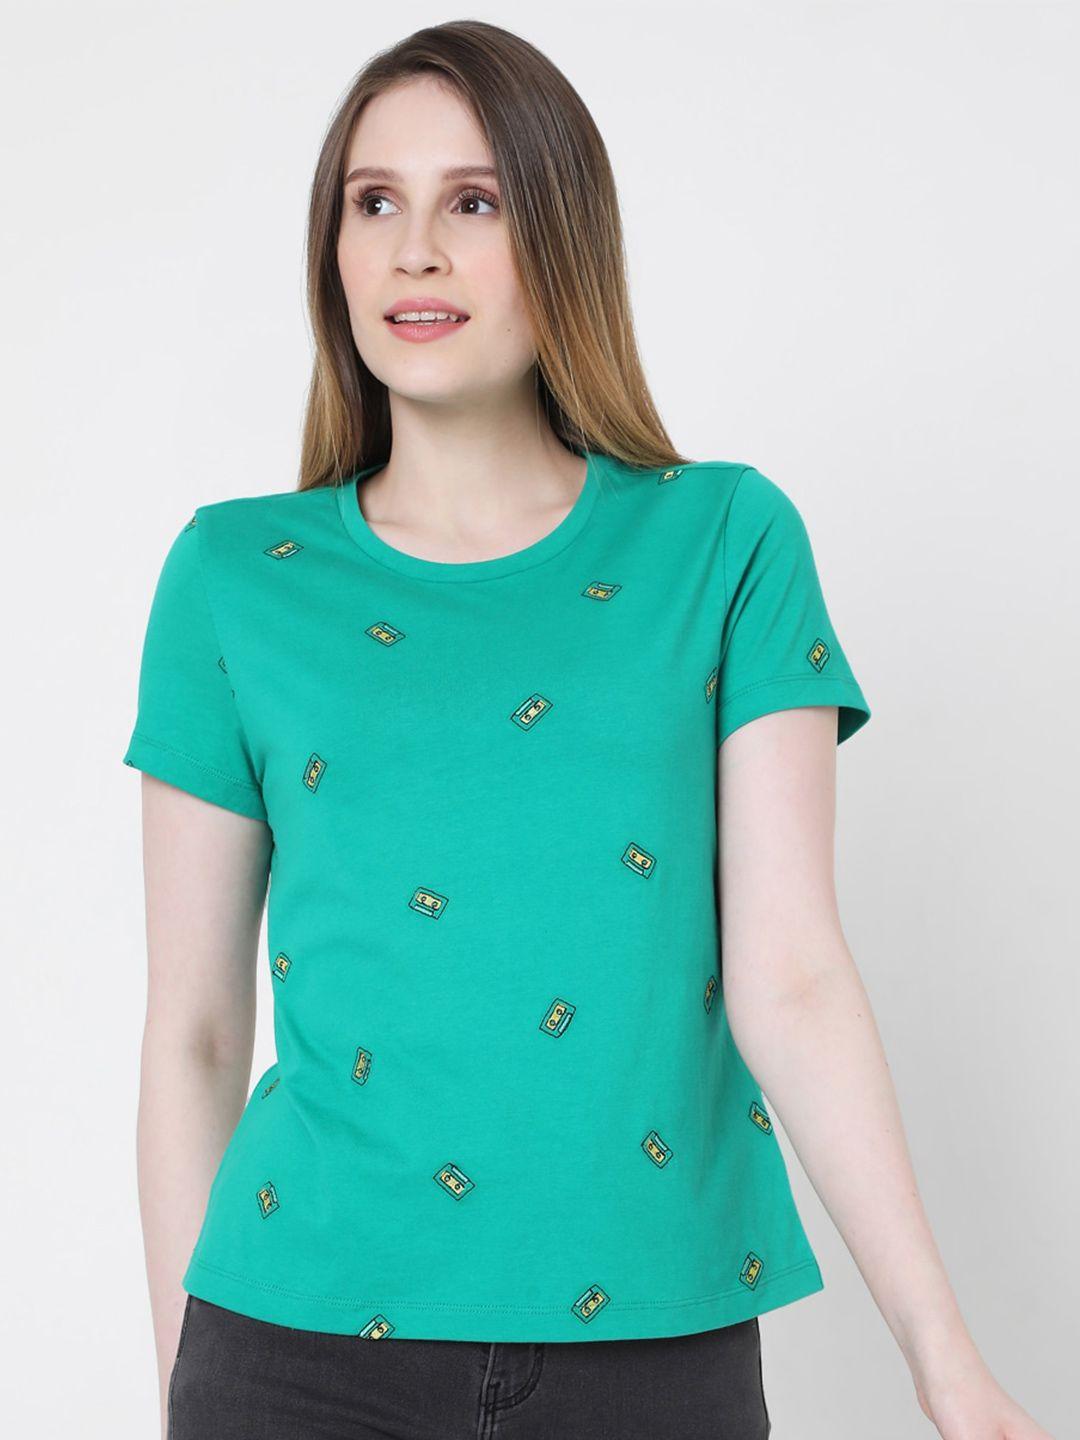 vero moda woman green conversational printed t-shirt